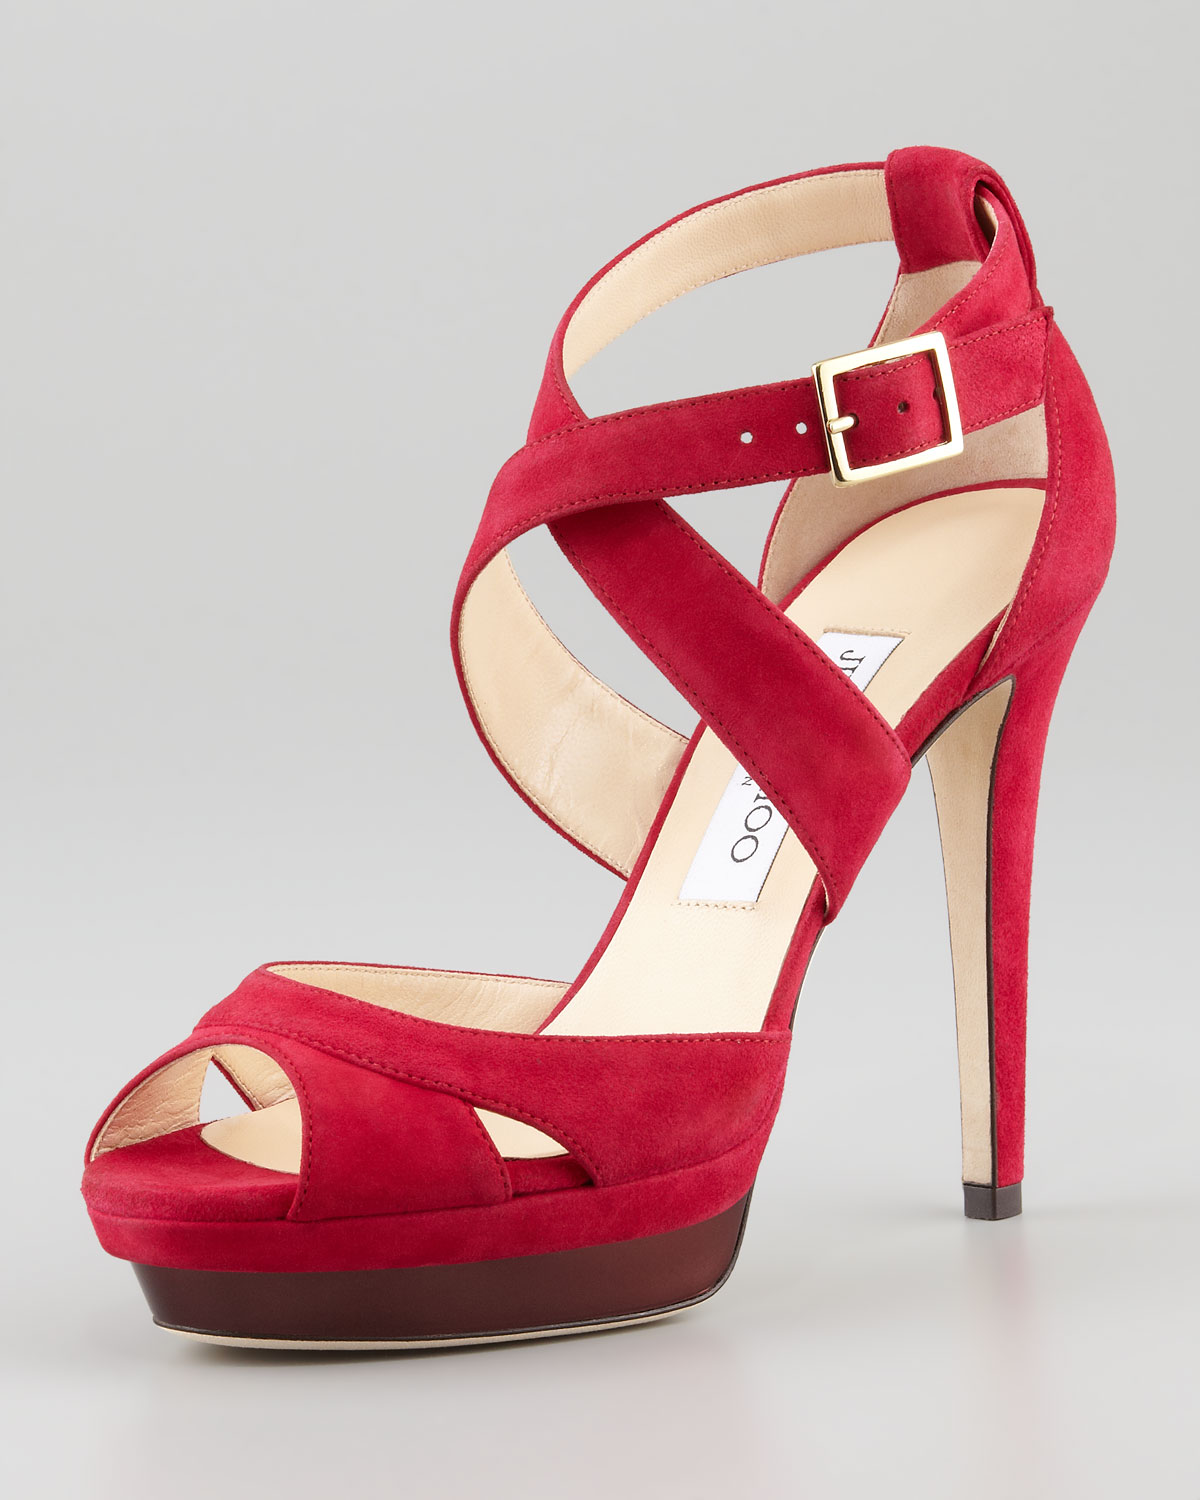 Jimmy Choo Kuki Suede Platform Sandal in Raspberry (Red) - Lyst